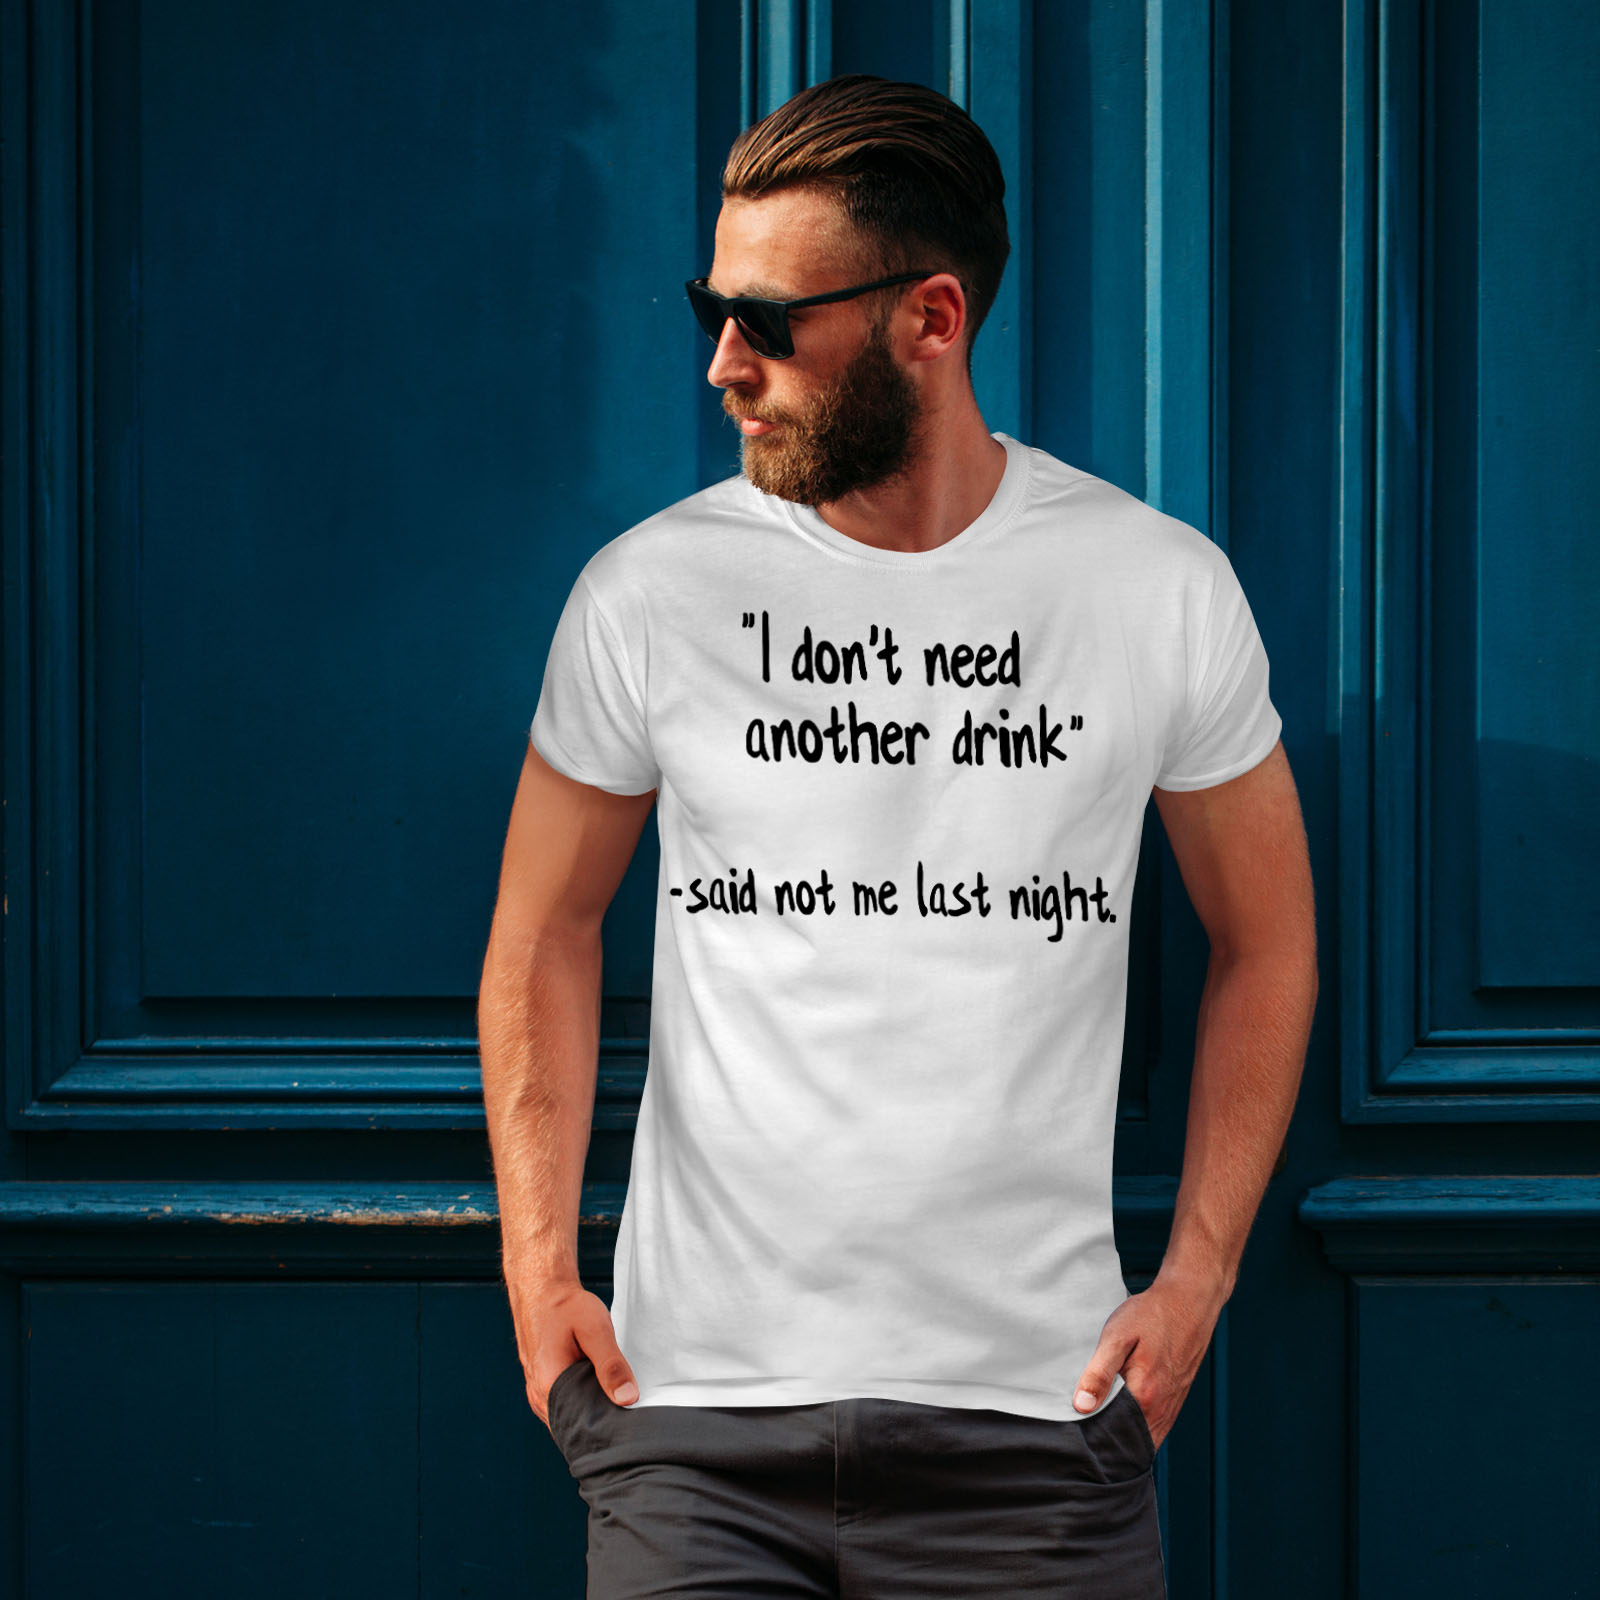 funny-t-shirt-slogans (20)